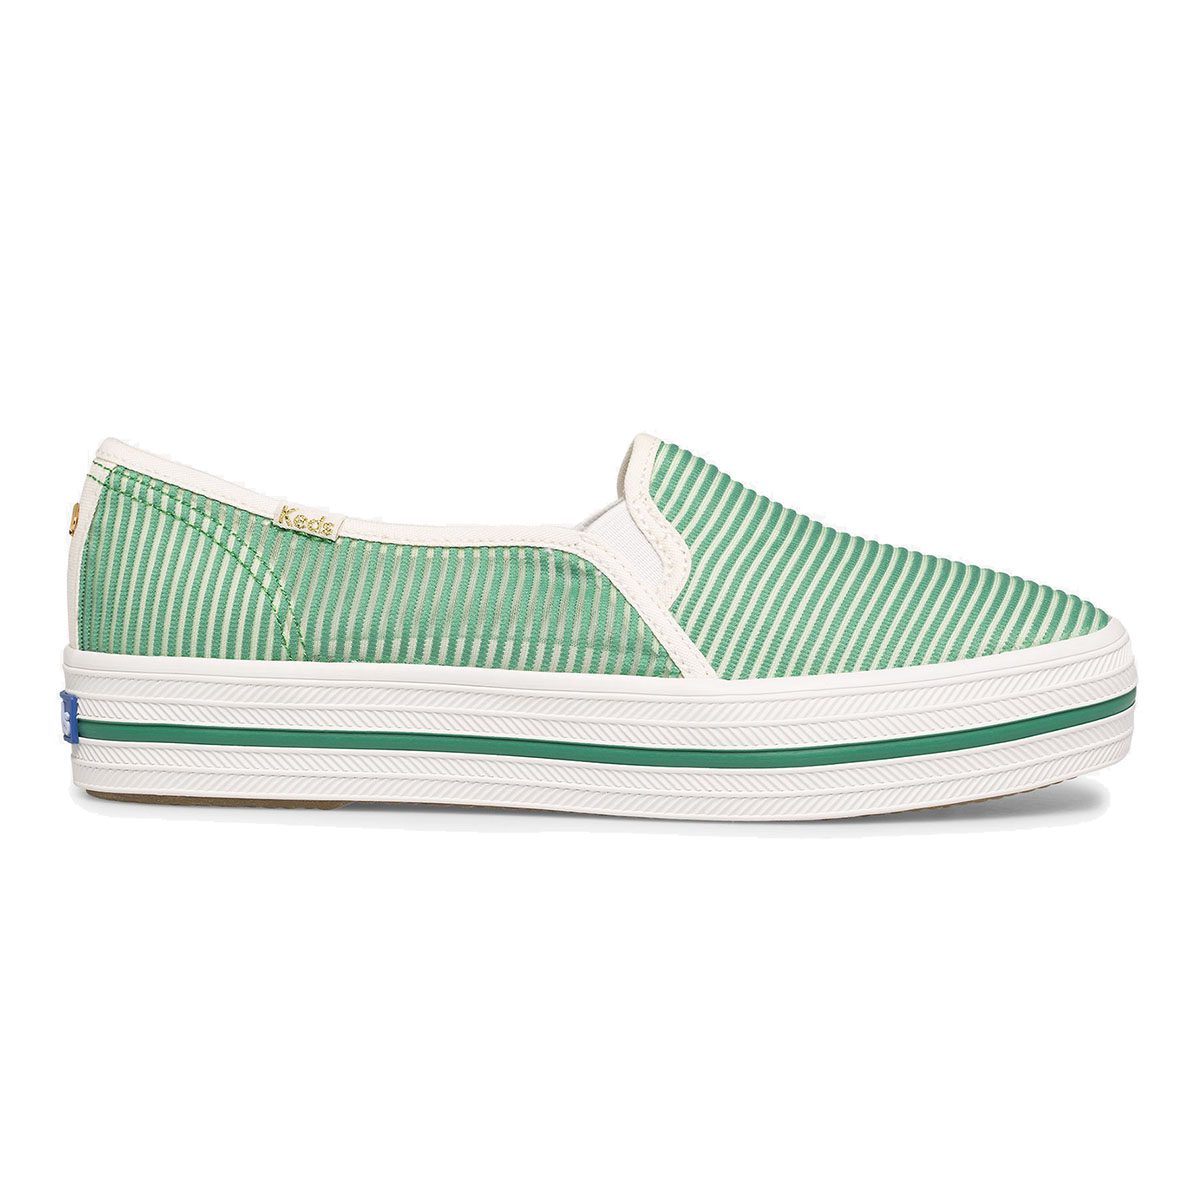 Keds x Kate Spade New York Triple Decker Green Slip-On Sneakers WF65112 -  